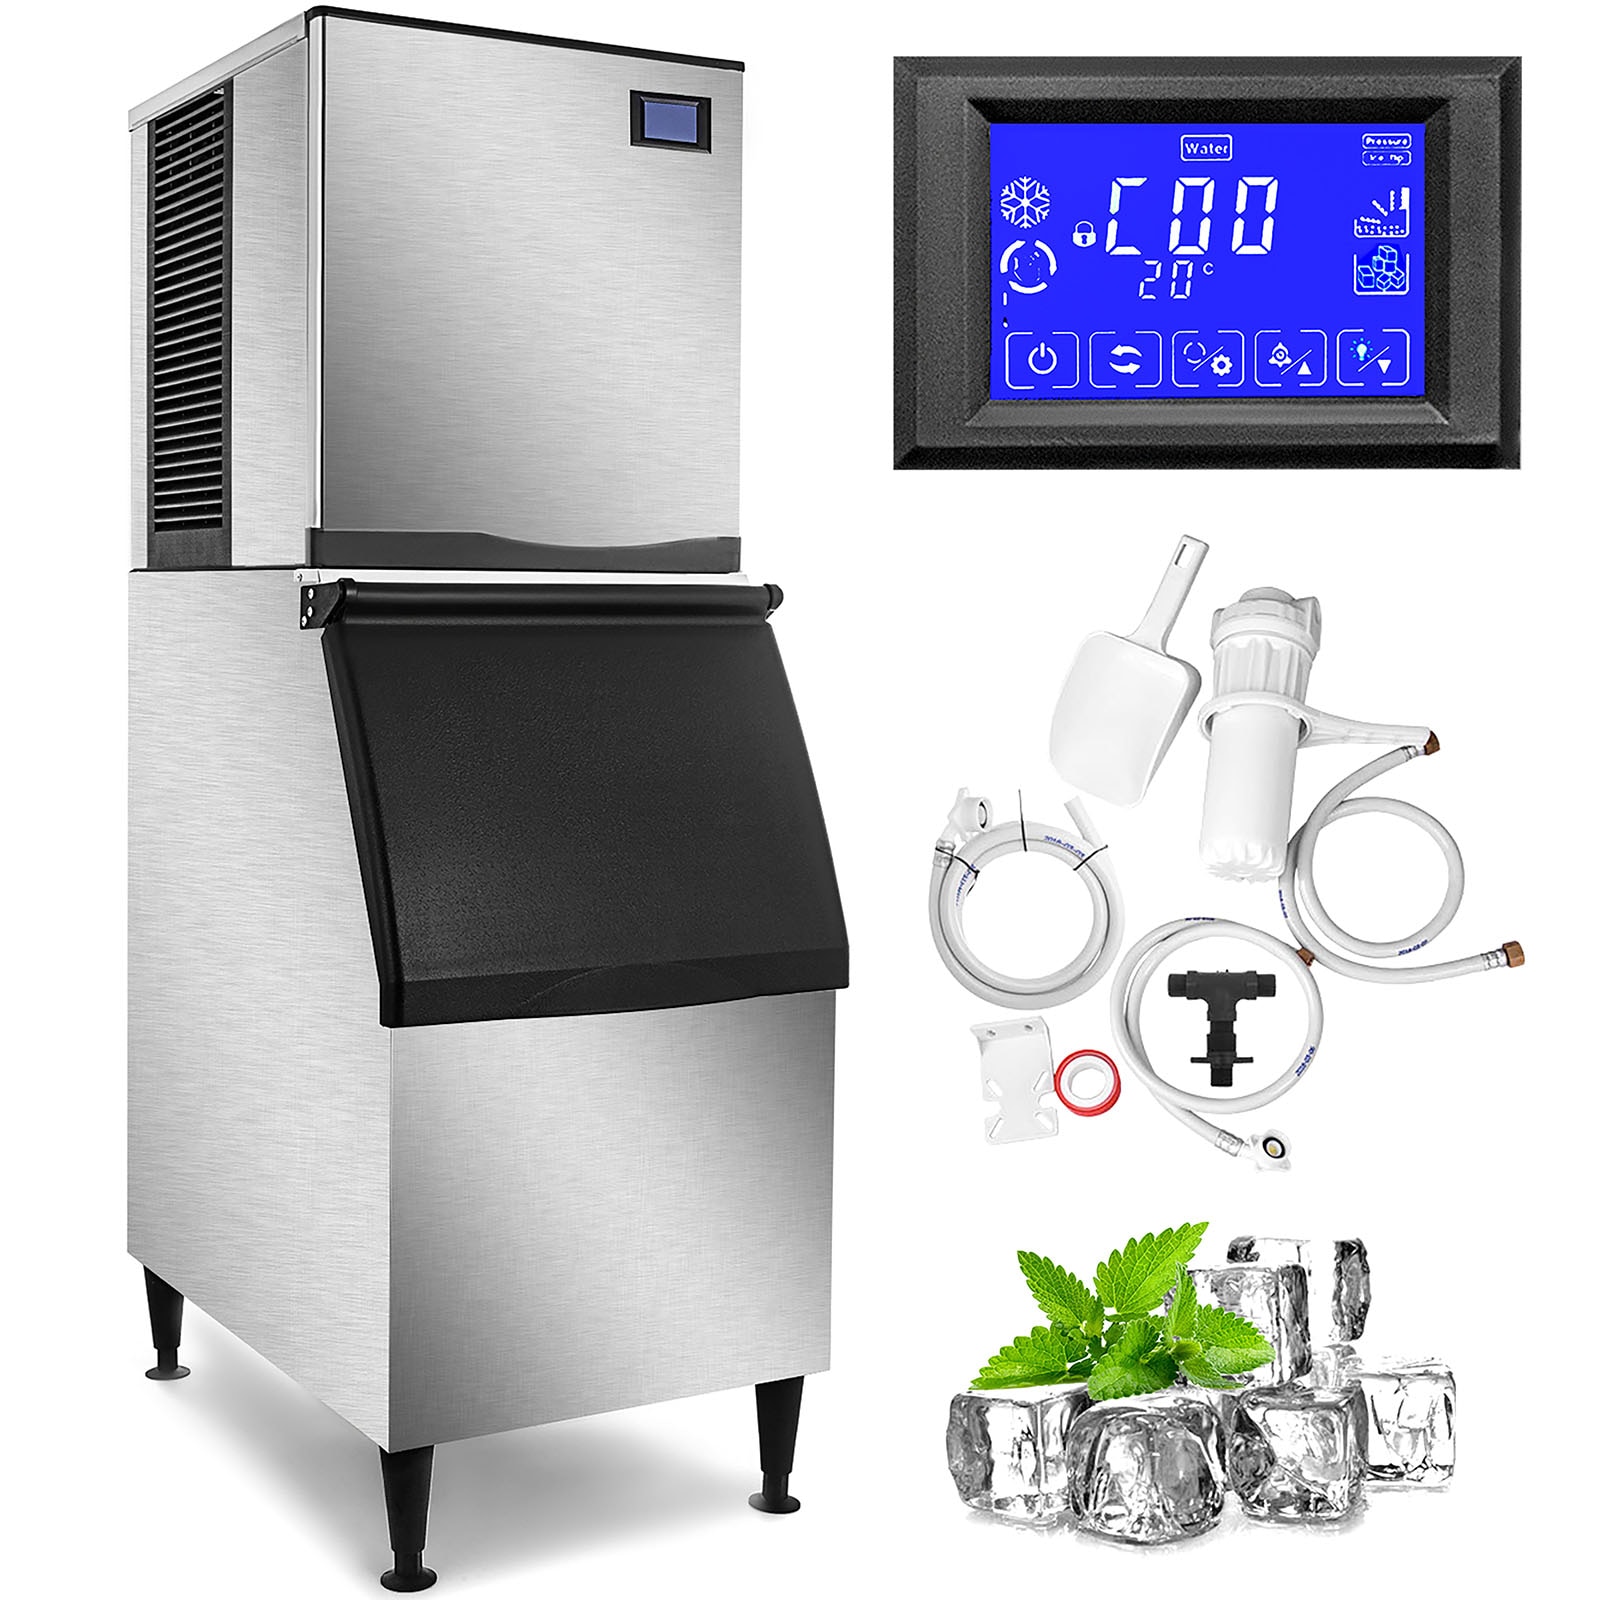 Coldline NU550 22 550 lb. Ice Machine, Air Cooled, Nugget Cube